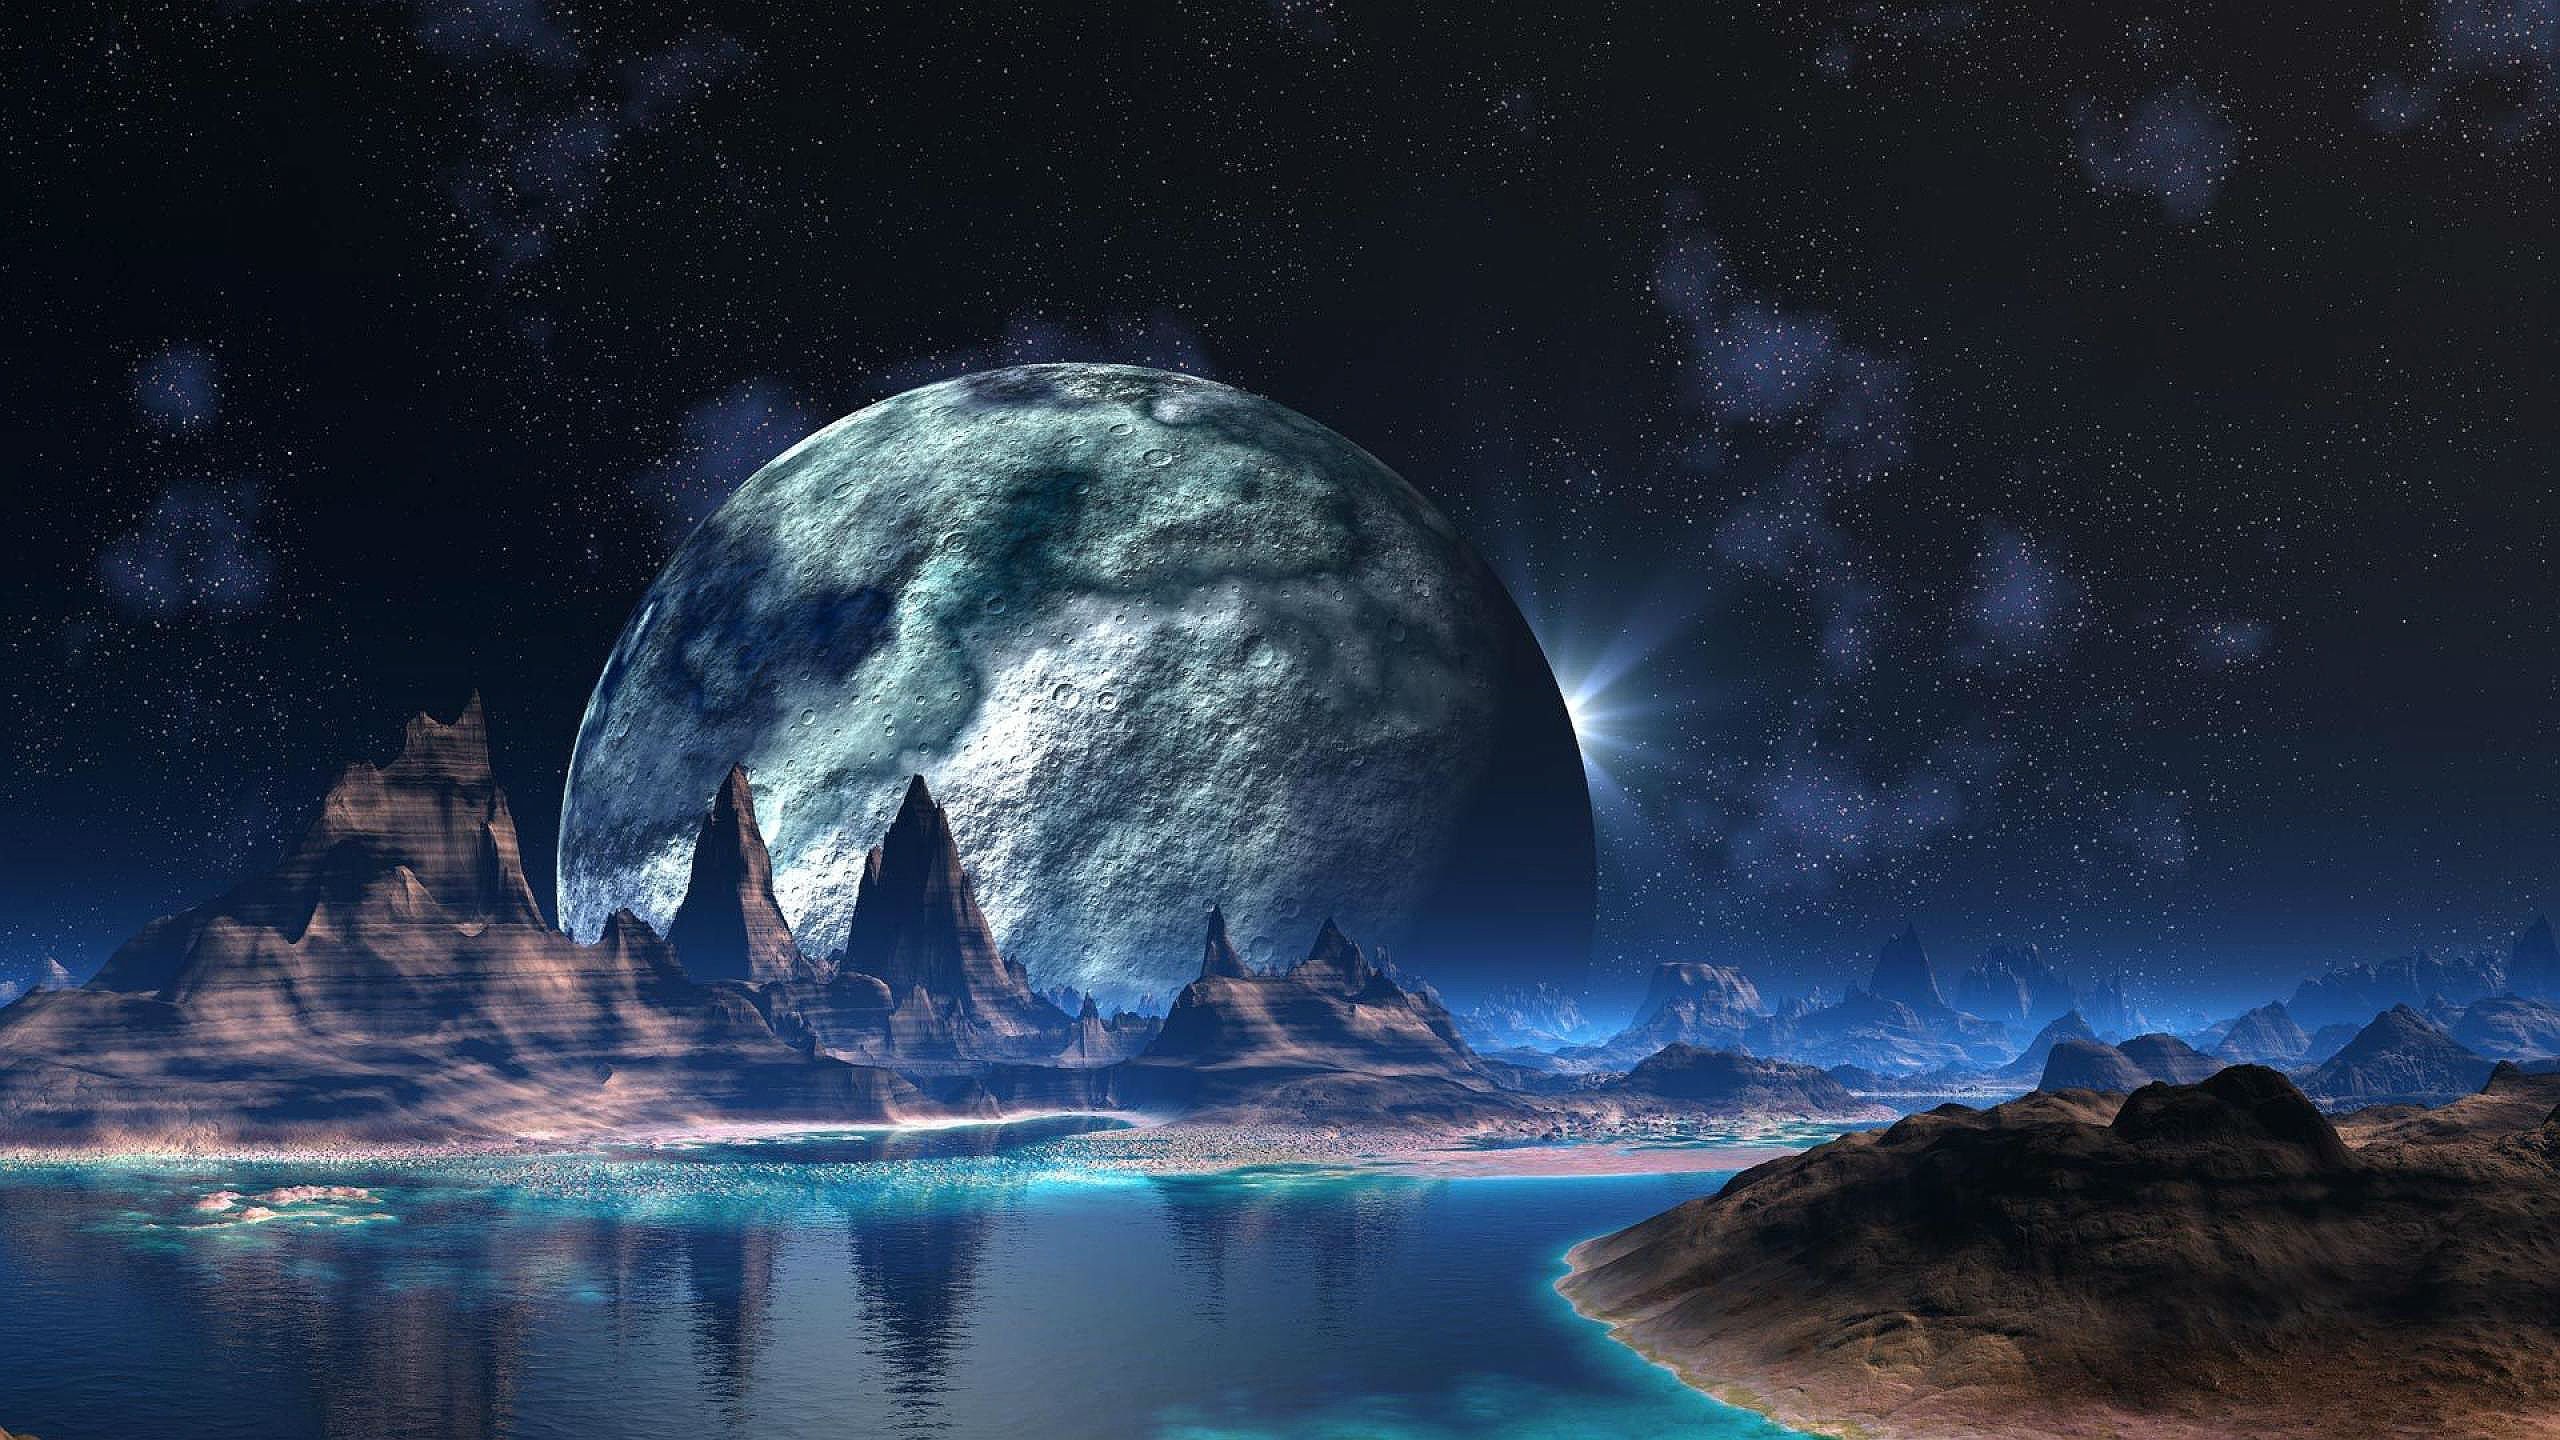 ALIEN horror sci fi futuristic dark aliens creature survival landscape planet wallpaper 809203 WallpaperUP